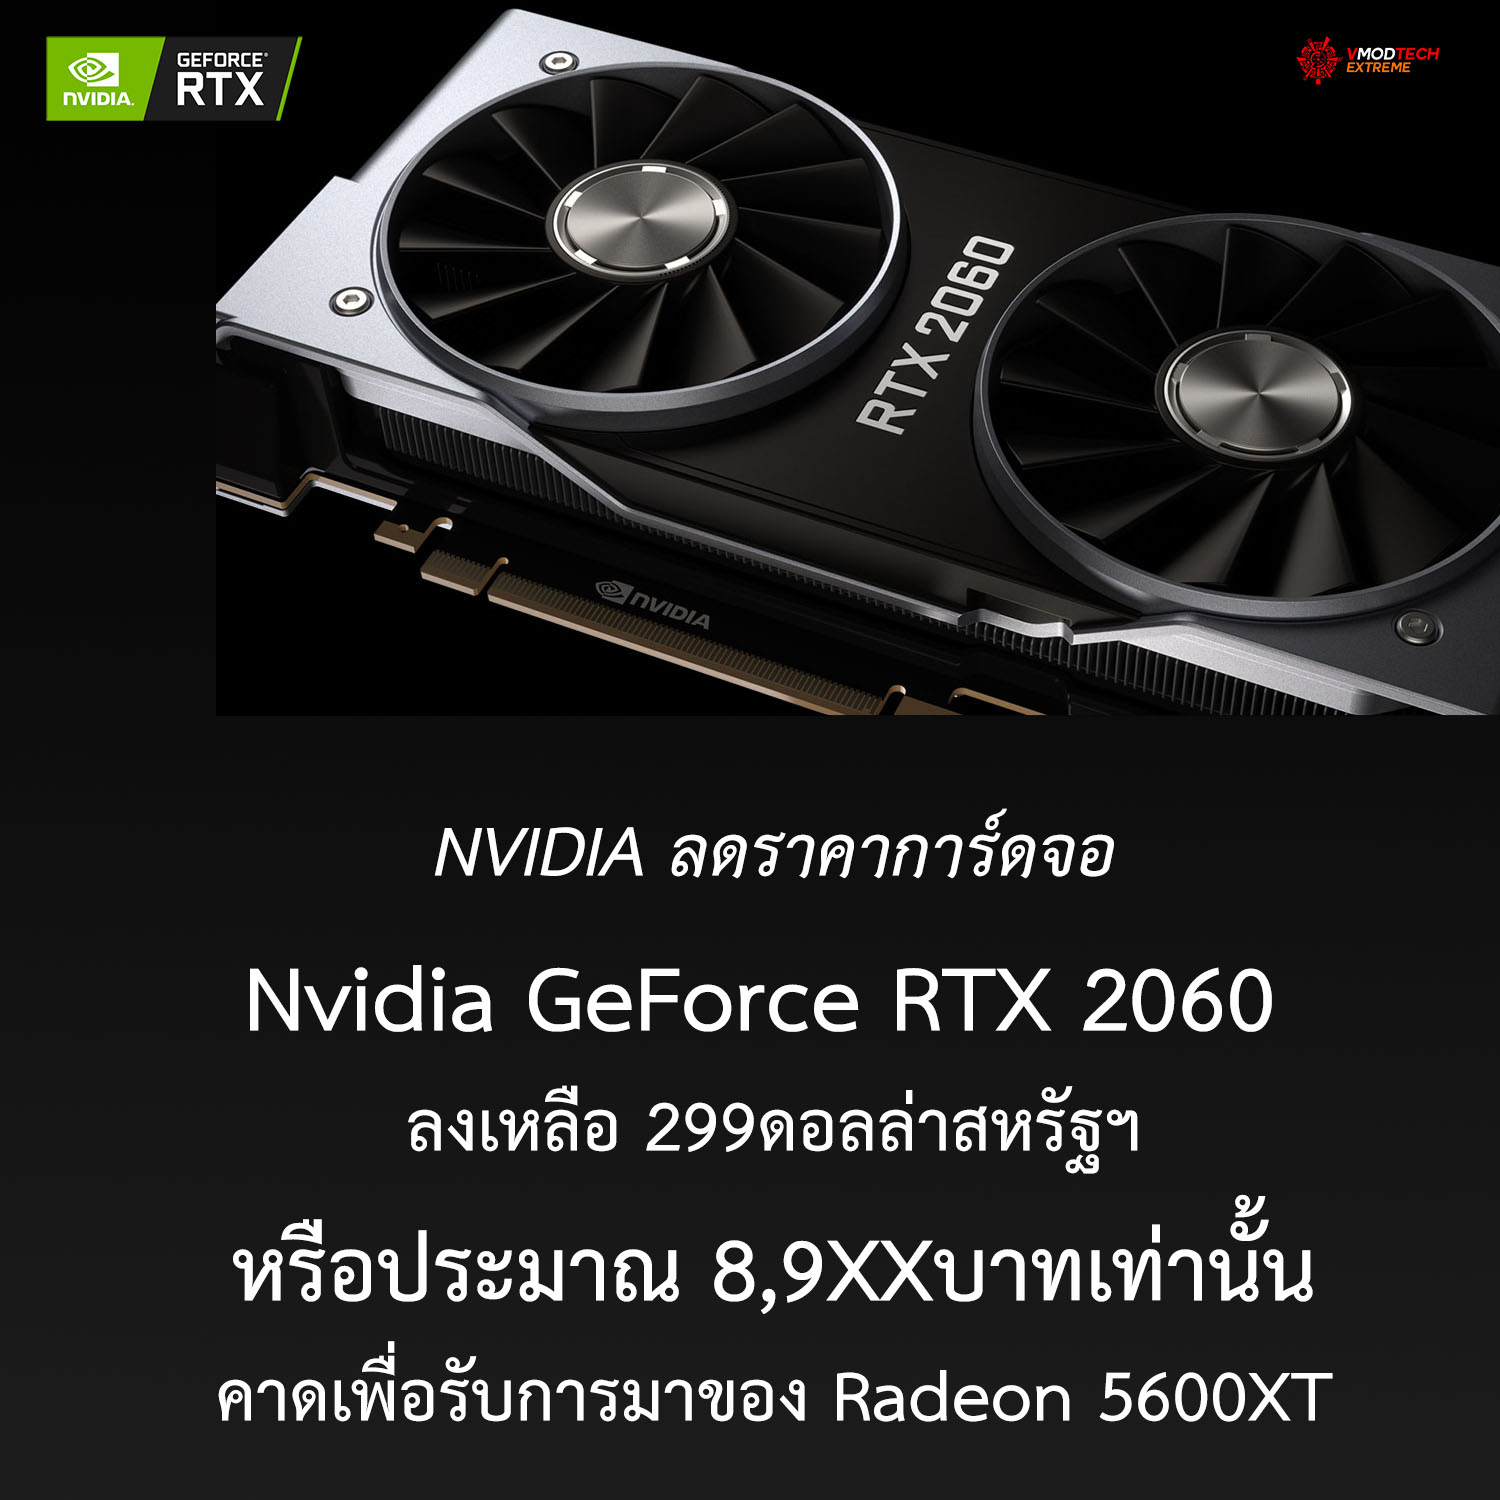 rtx 2060 price 299usd1 Nvidia ลดราคาการ์ดจอ GeForce RTX 2060 ลงเหลือ 299ดอลล่าสหรัฐฯเพื่อเตรียมรับการมาของ Radeon 5600XT 